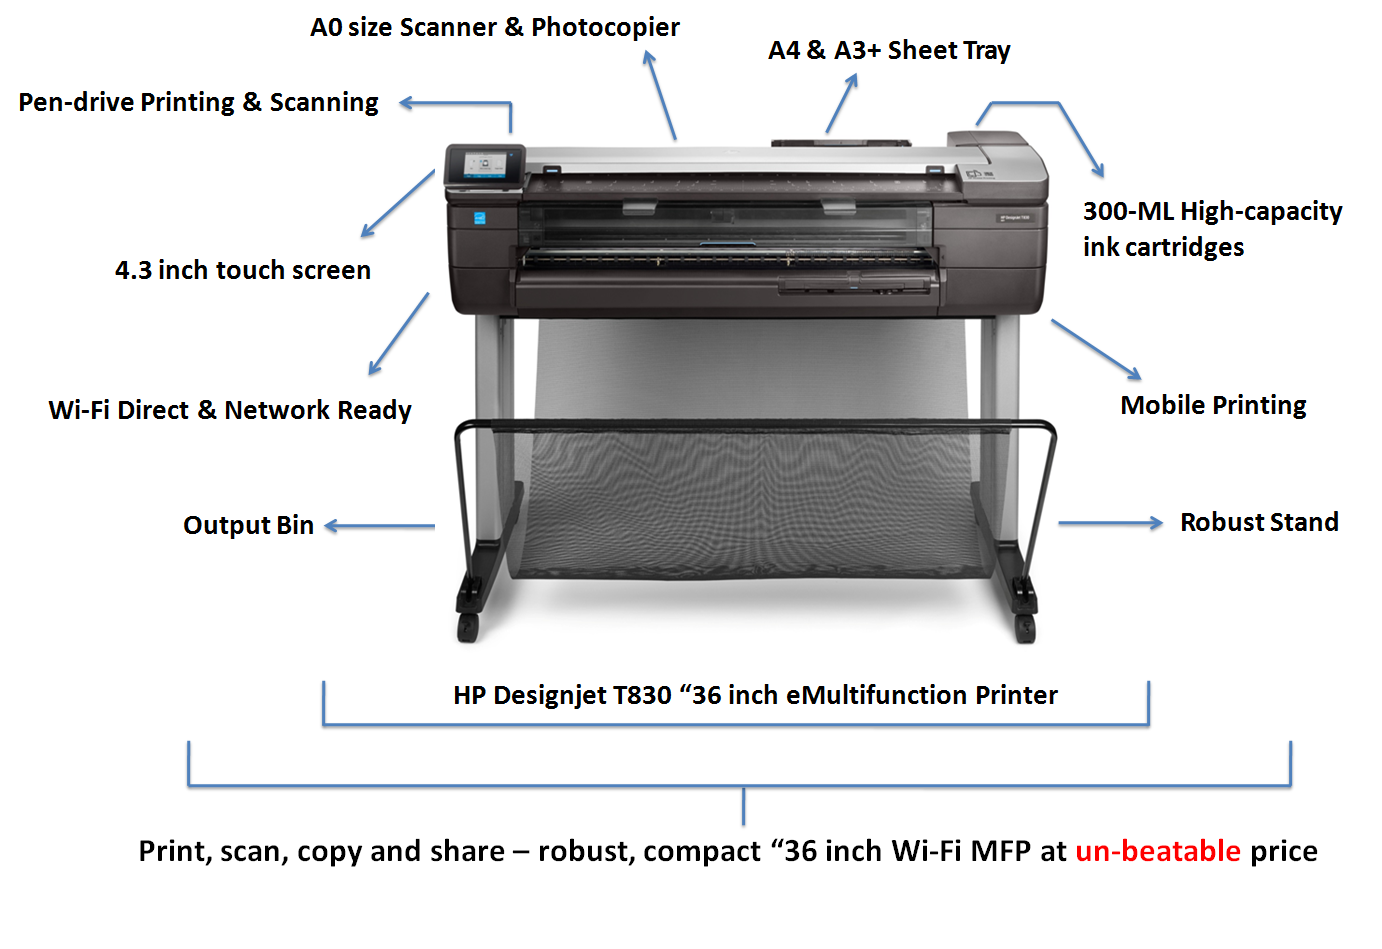 HP Designjet T830 ePrinter